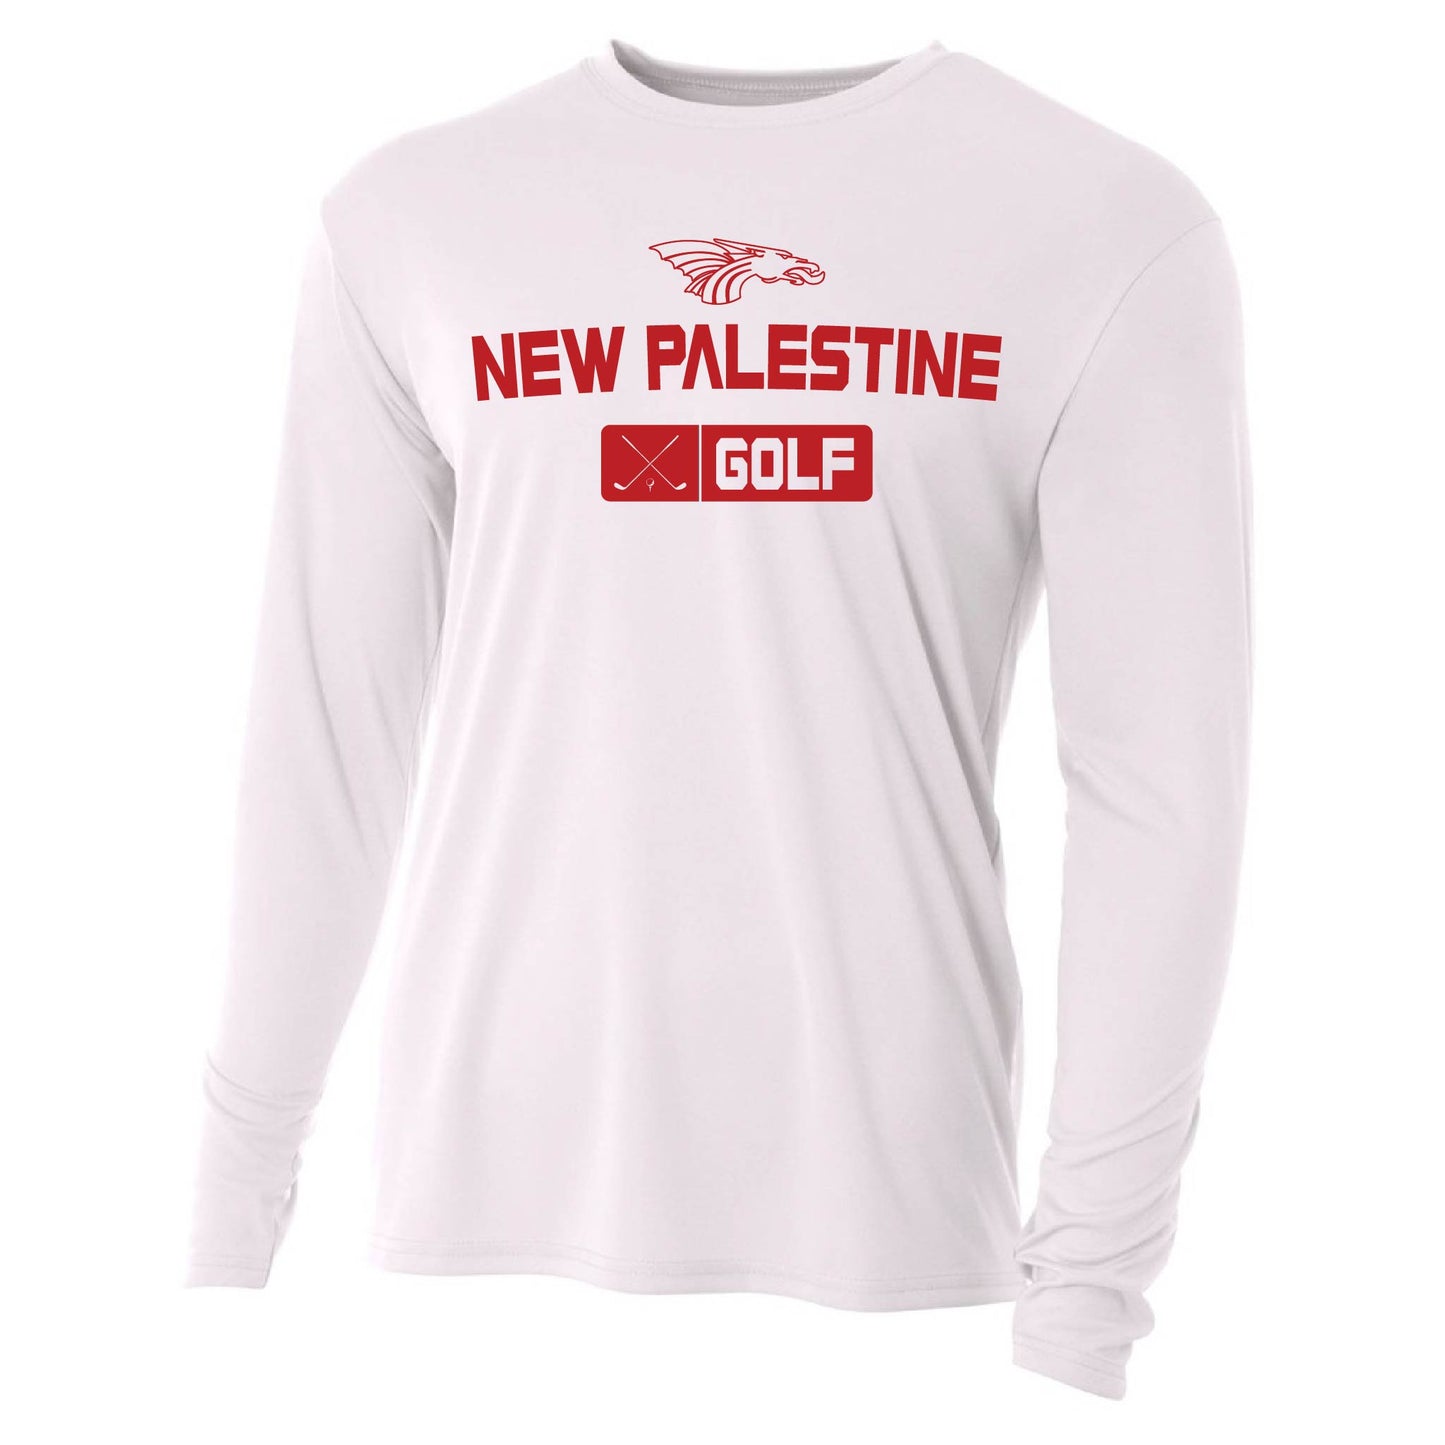 Mens Long Sleeve T-Shirt - New Palestine Golf